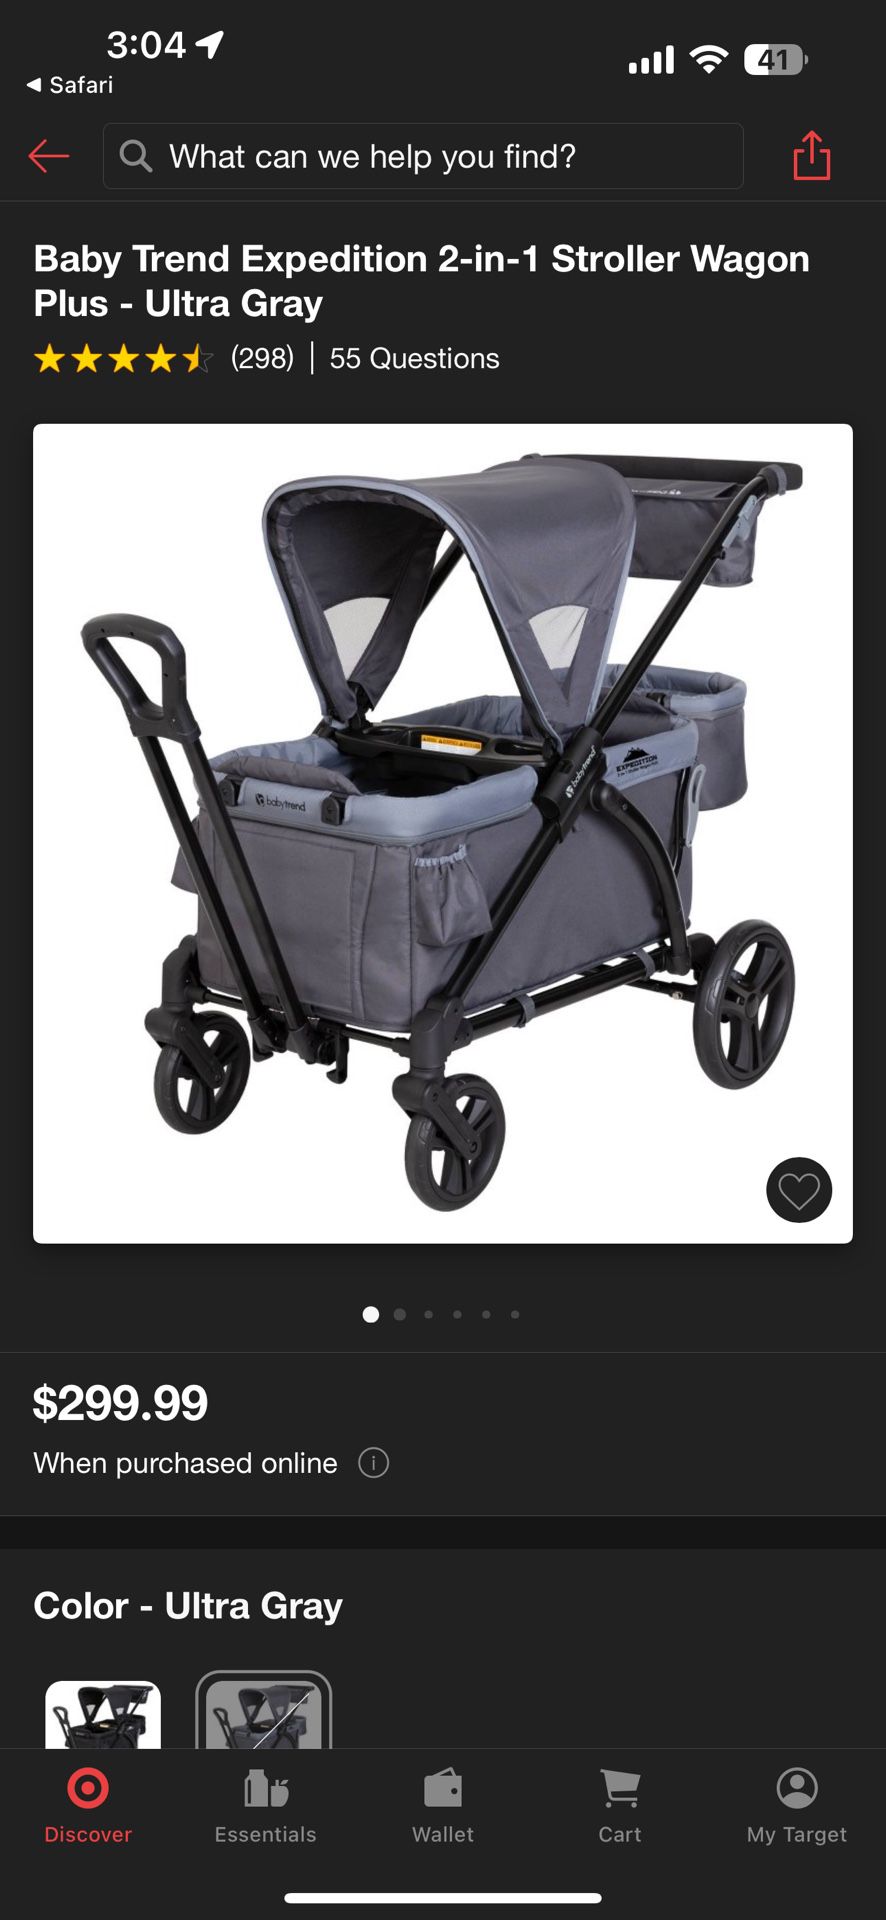 Baby Trend Stroller Wagon 